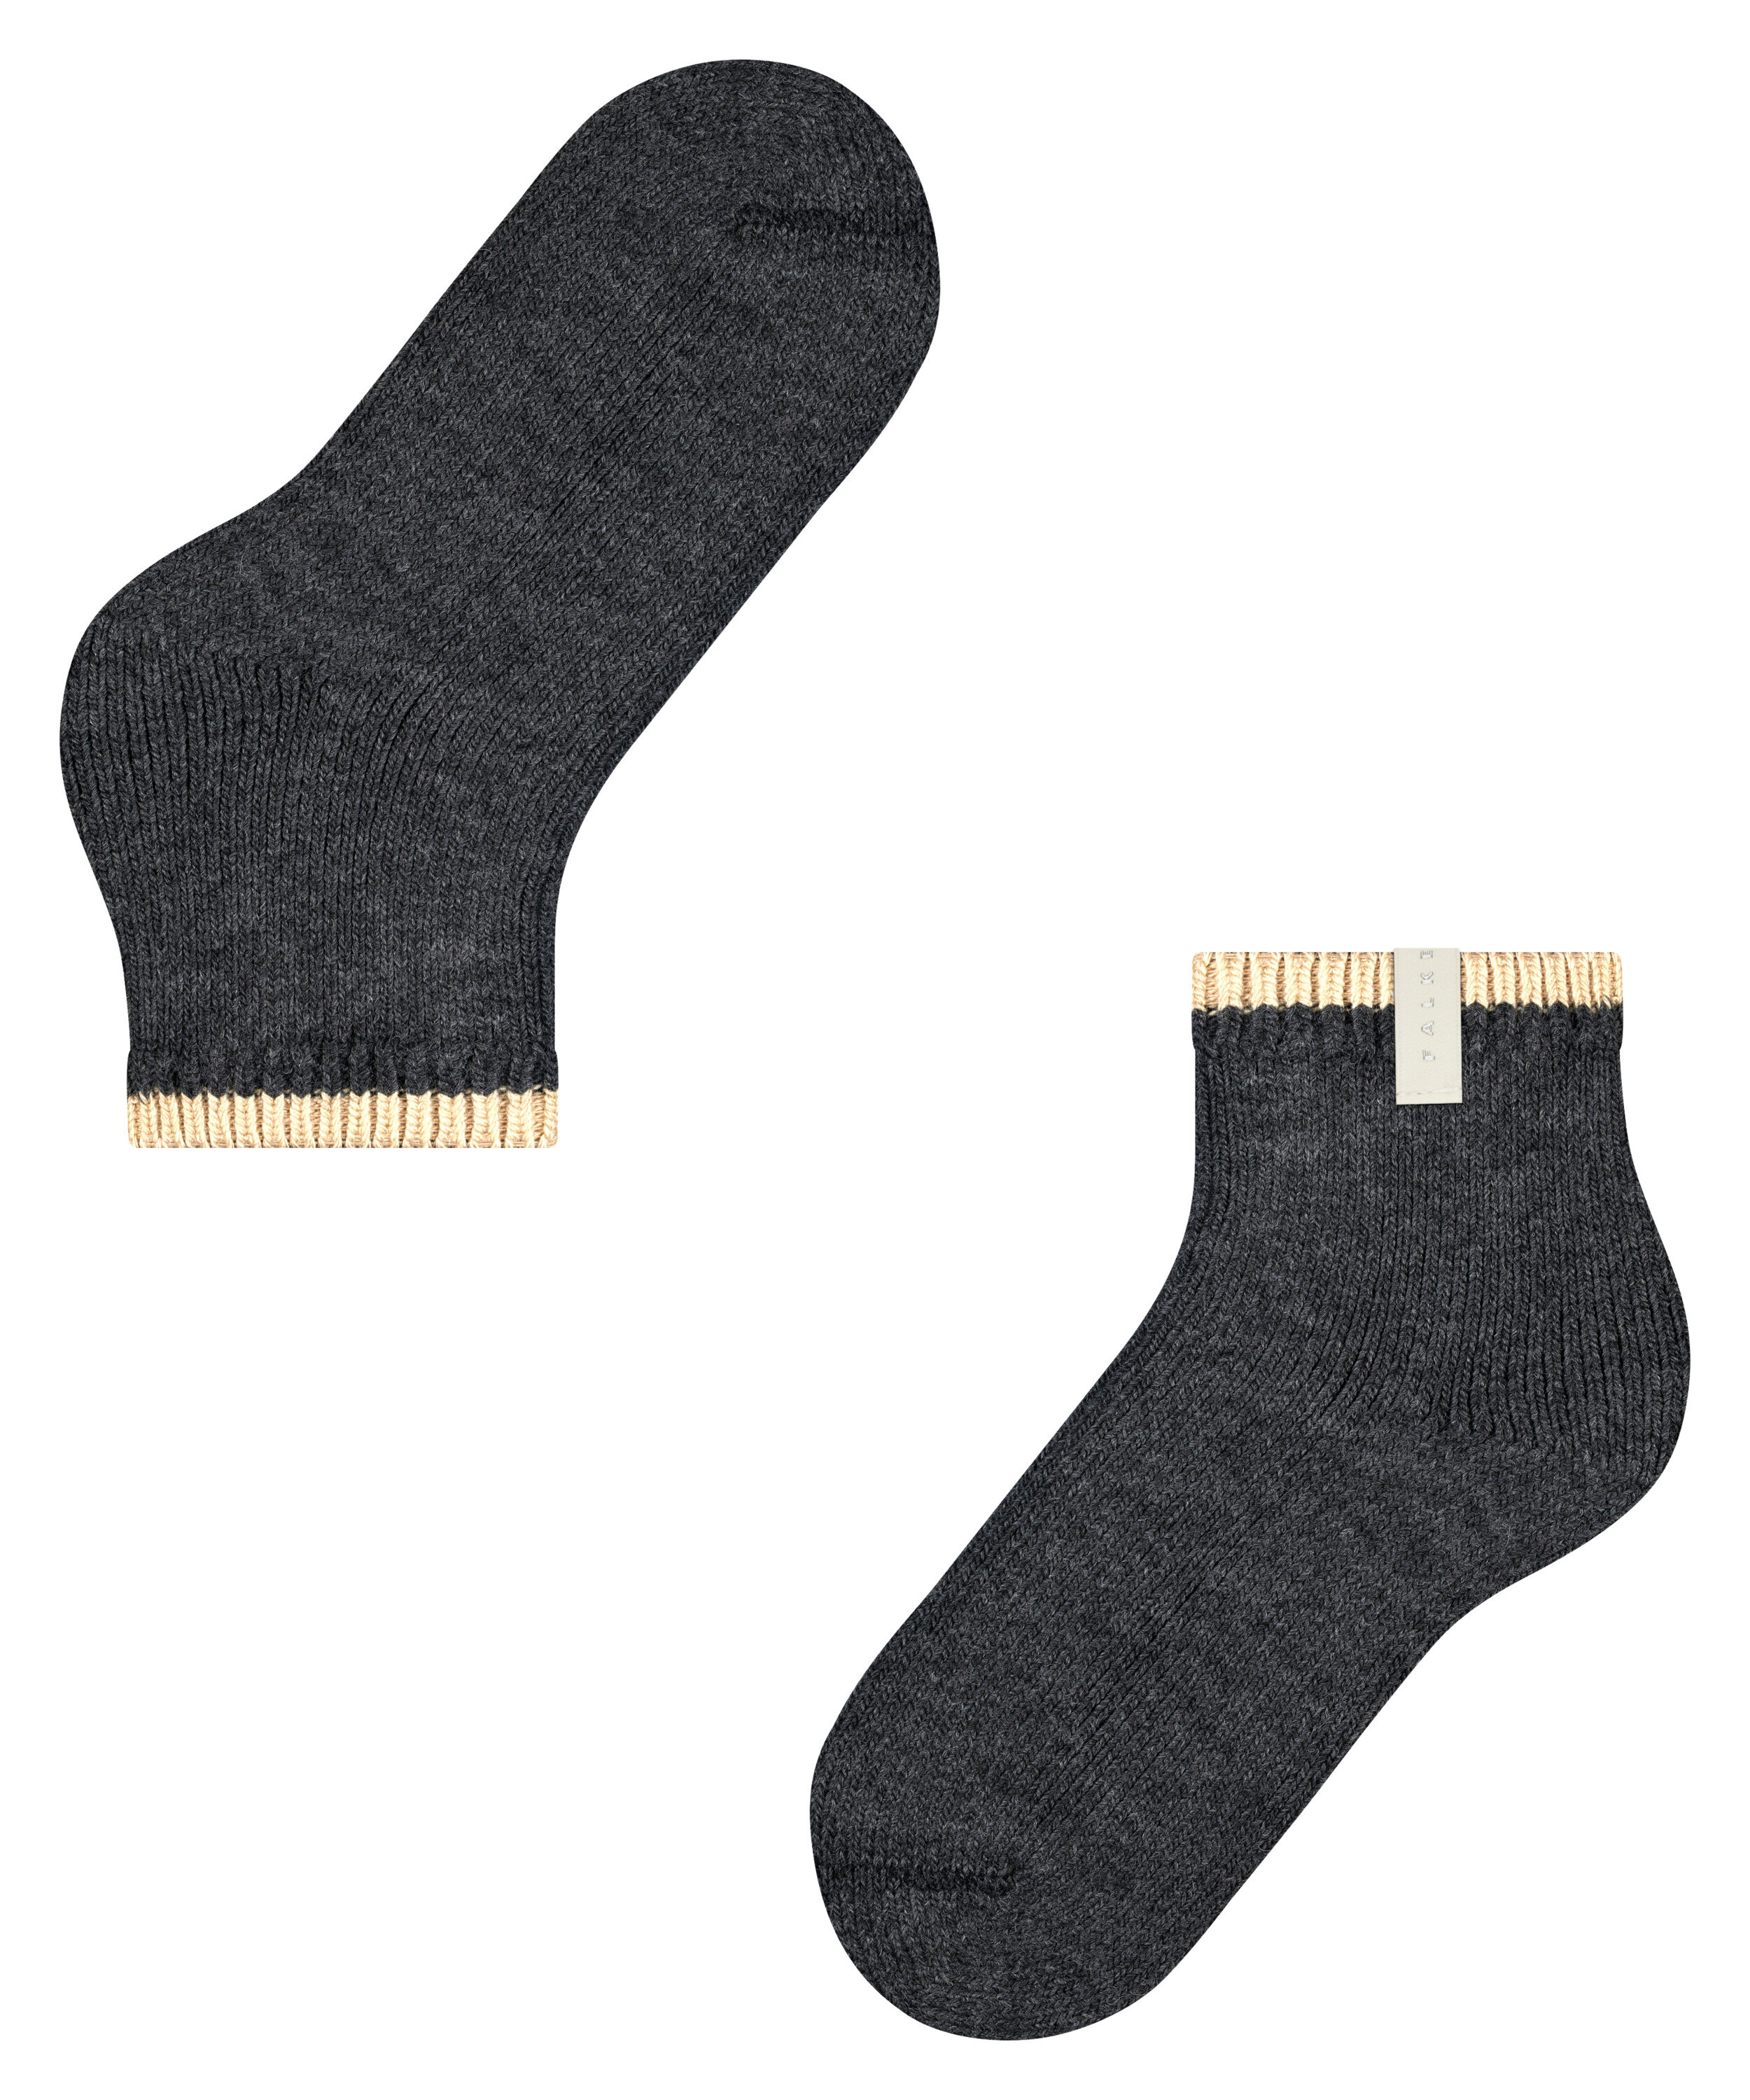 Kurz-Socke "Cosy Plush" mit Plüschfutter